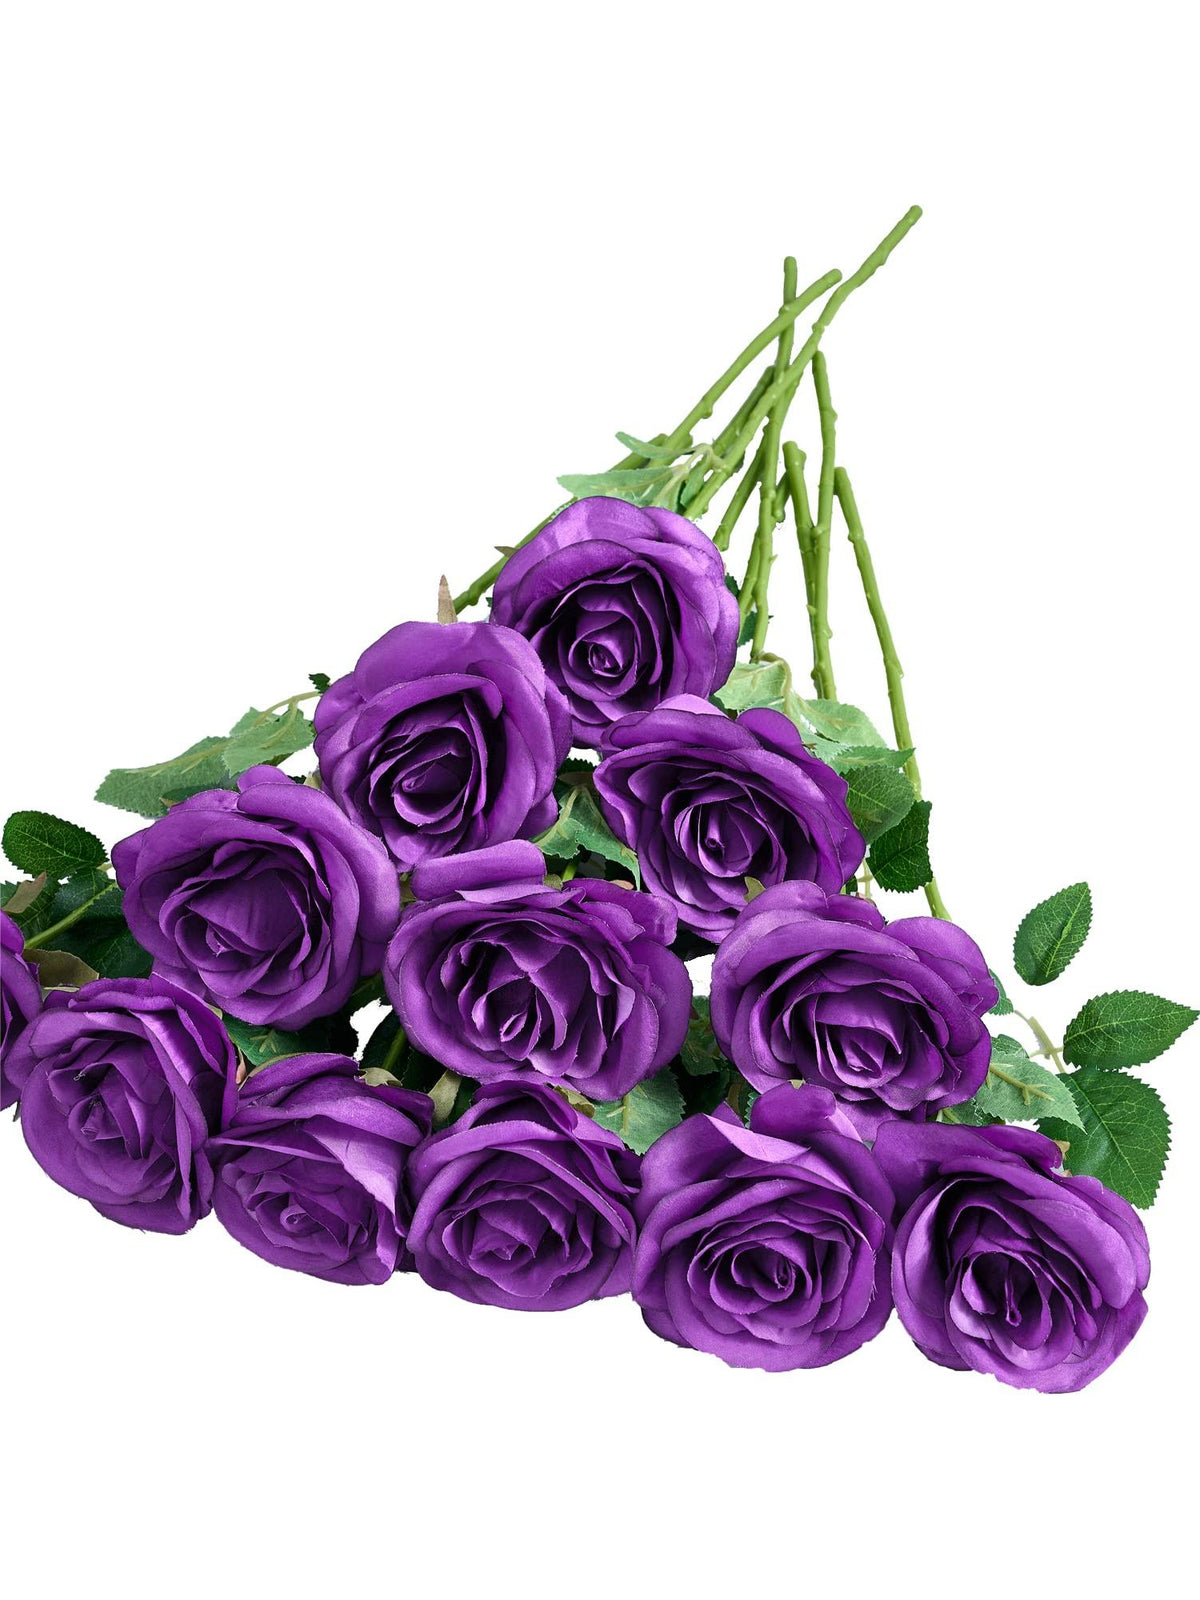 Purple Artificial Rose Flowers With Long Stems Wedding Bouquet Centerpieces Decorations HH8046